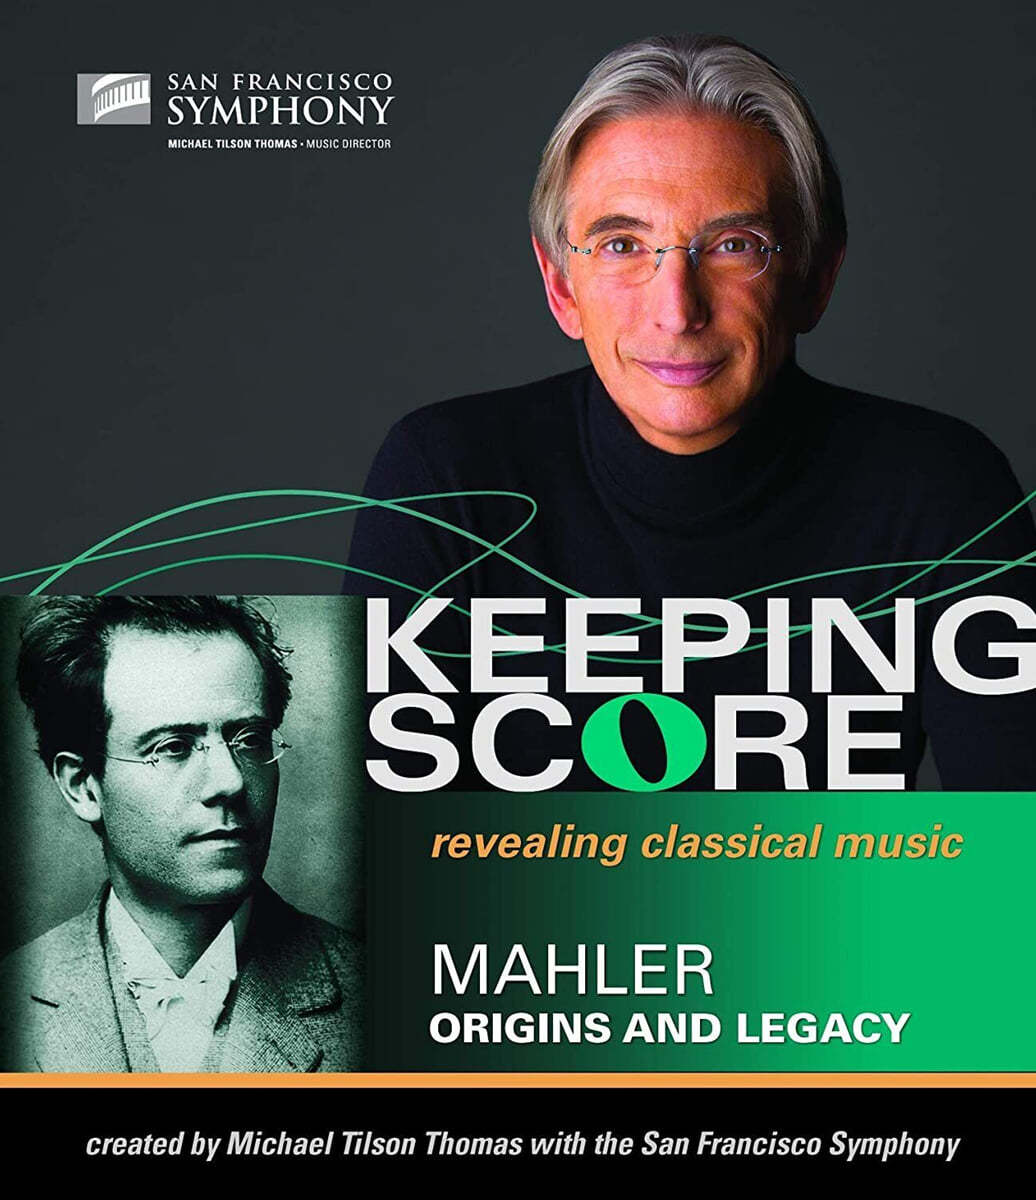 Michael Tilson Thomas 키핑 스코어 - 말러: 교향곡 1번, 방랑하는 젊은이의 노래 (Keeping Score - Mahler: Symphony No.1 'Titan', Origins And Legacy) [2Disc]